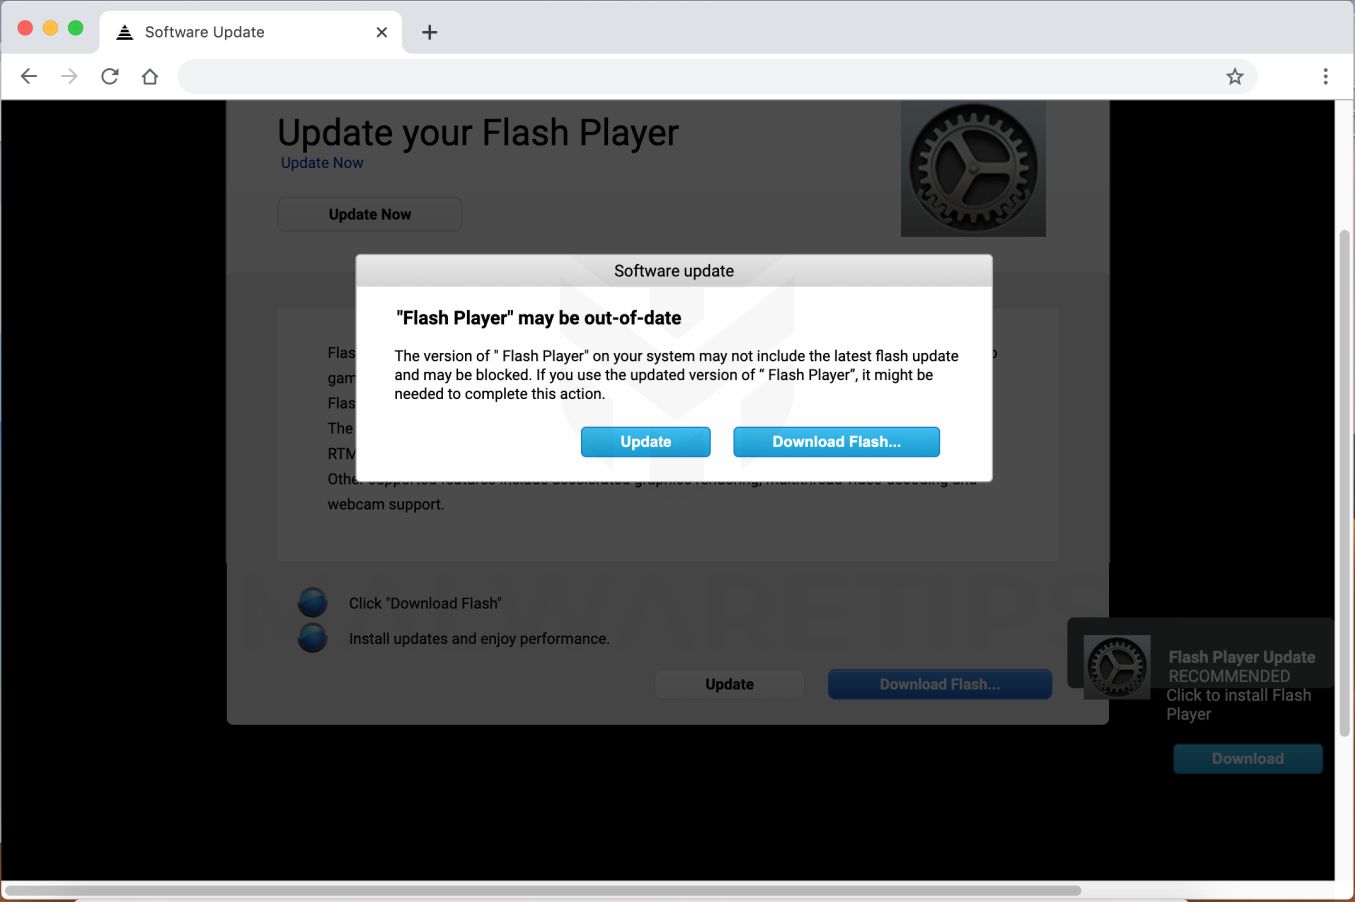 Rechtsaf Bel terug Circus How To Remove Update Your Flash Player Pop-up Virus